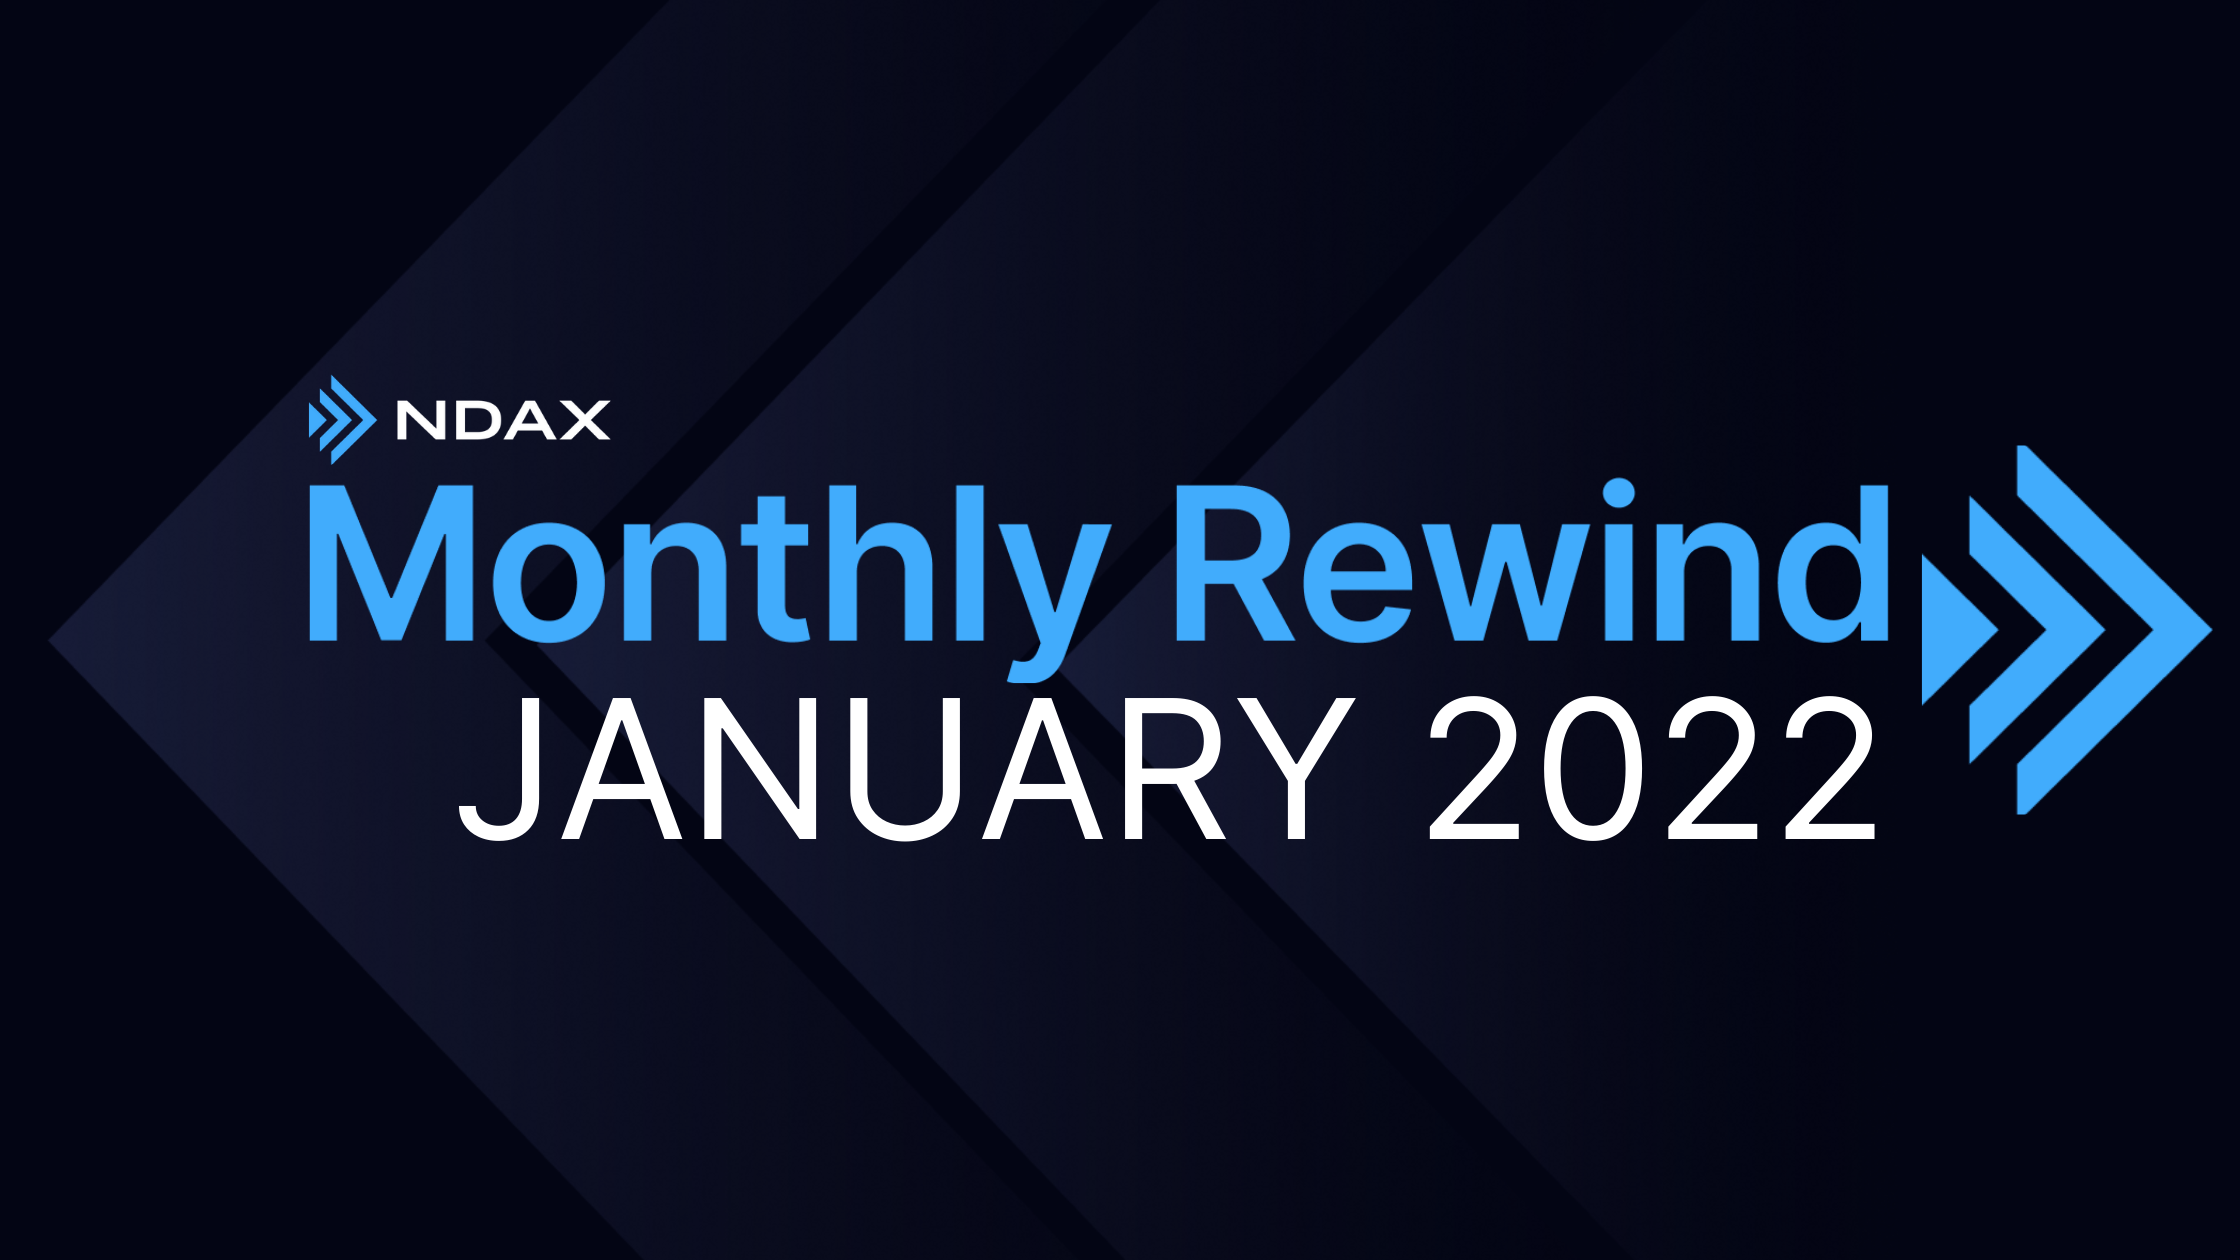 NDAX Monthly Rewind - January 2022